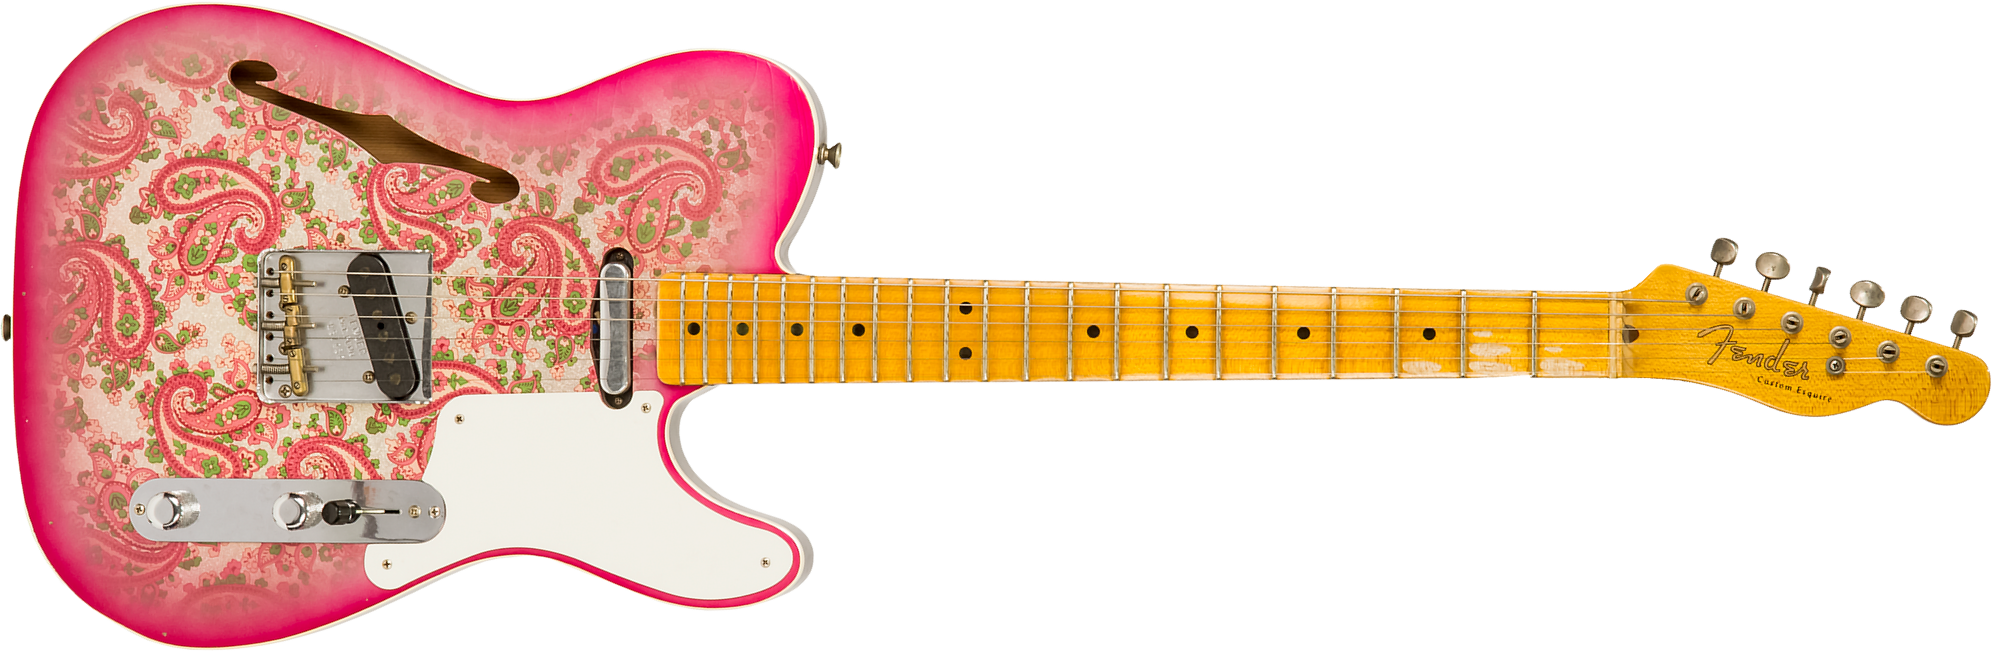 Fender Custom Shop Double Esquire/tele Custom 2s Ht Mn #r97434 - Journeyman Relic Aged Pink Paisley - Semi-Hollow E-Gitarre - Main picture